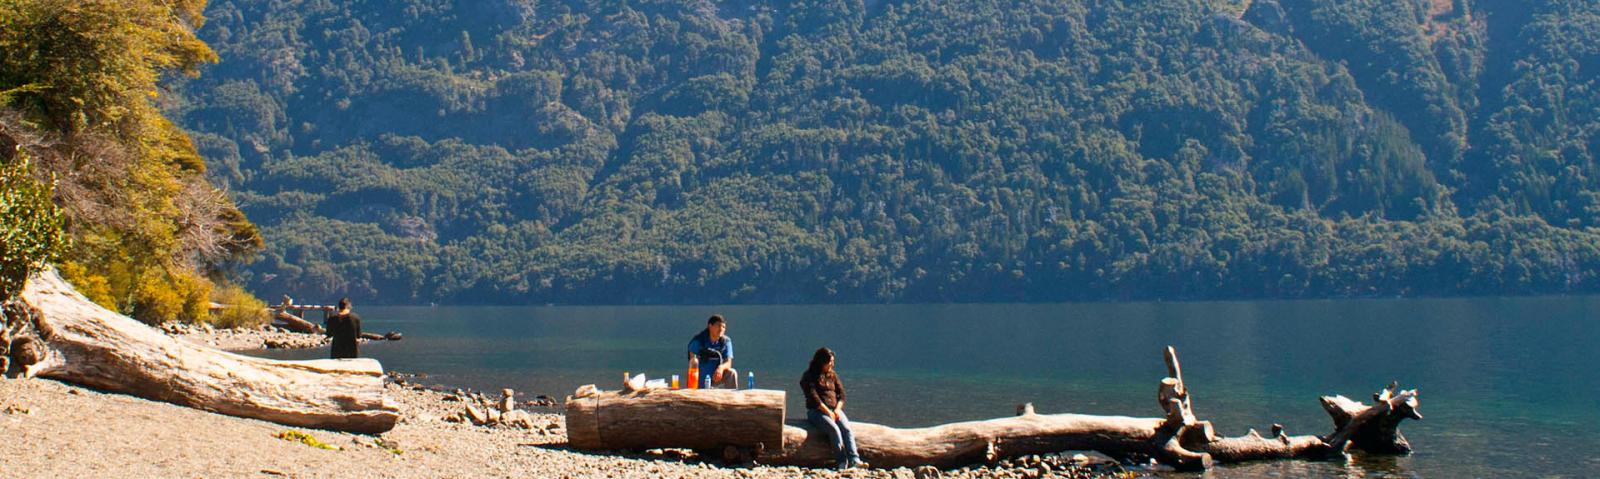 Lago Steffen - Excursiones - Bariloche